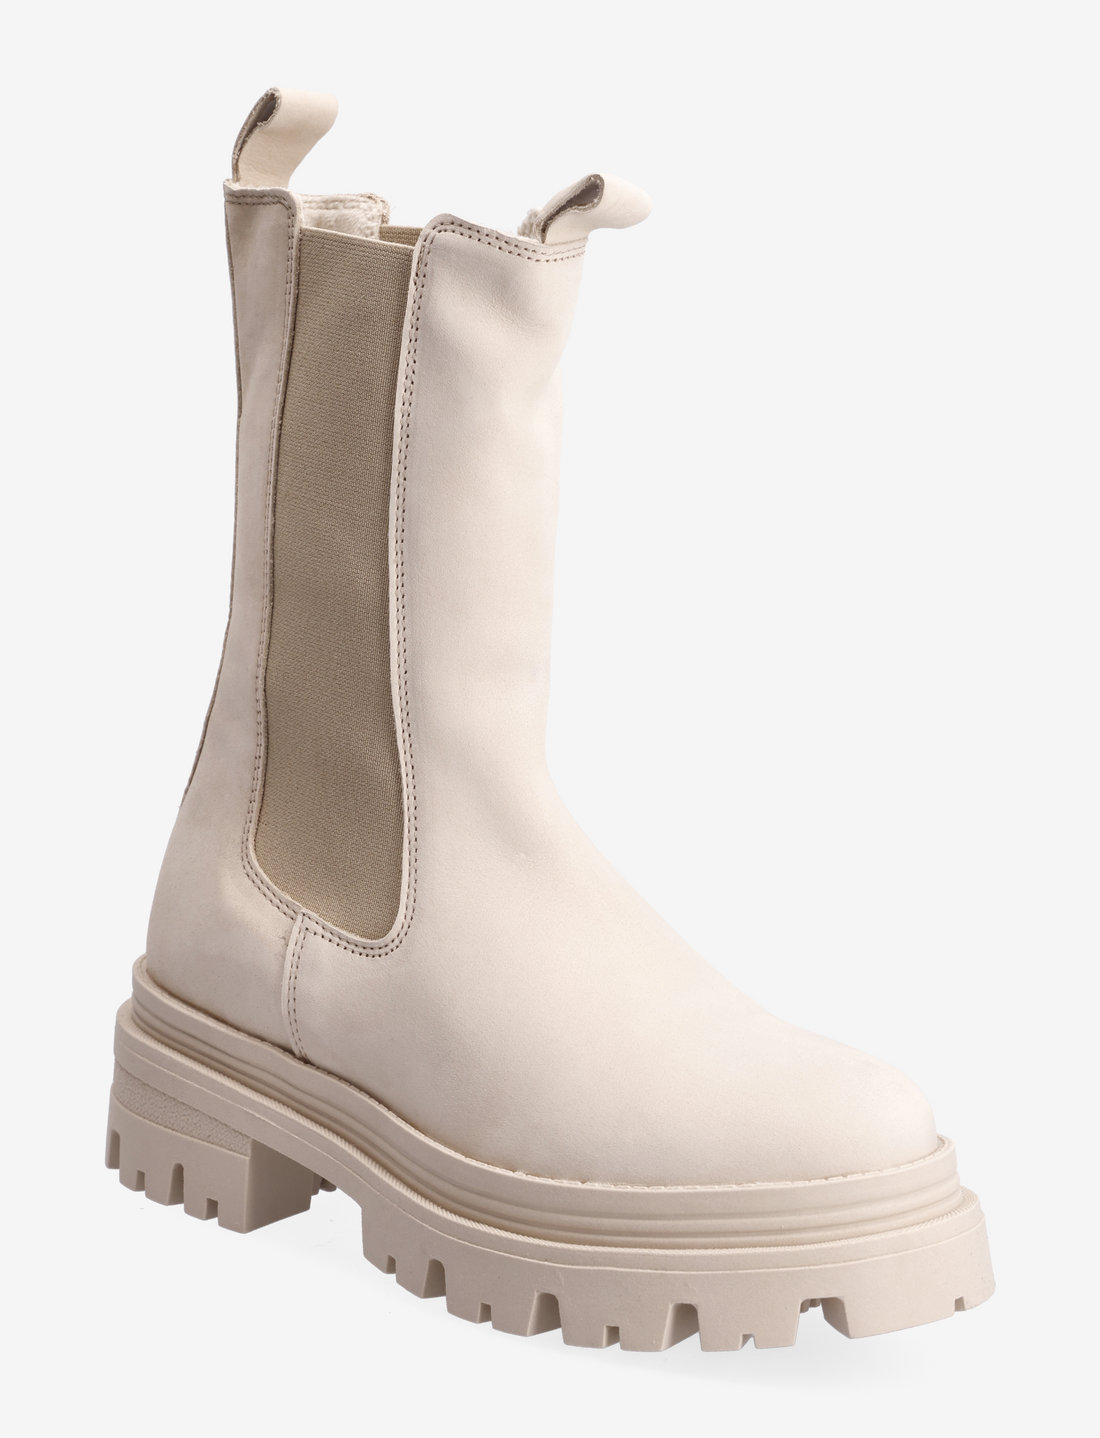 kranium rysten beundre Tamaris Women Boots (Antelope Uni/Creme) - 424 kr | Boozt.com